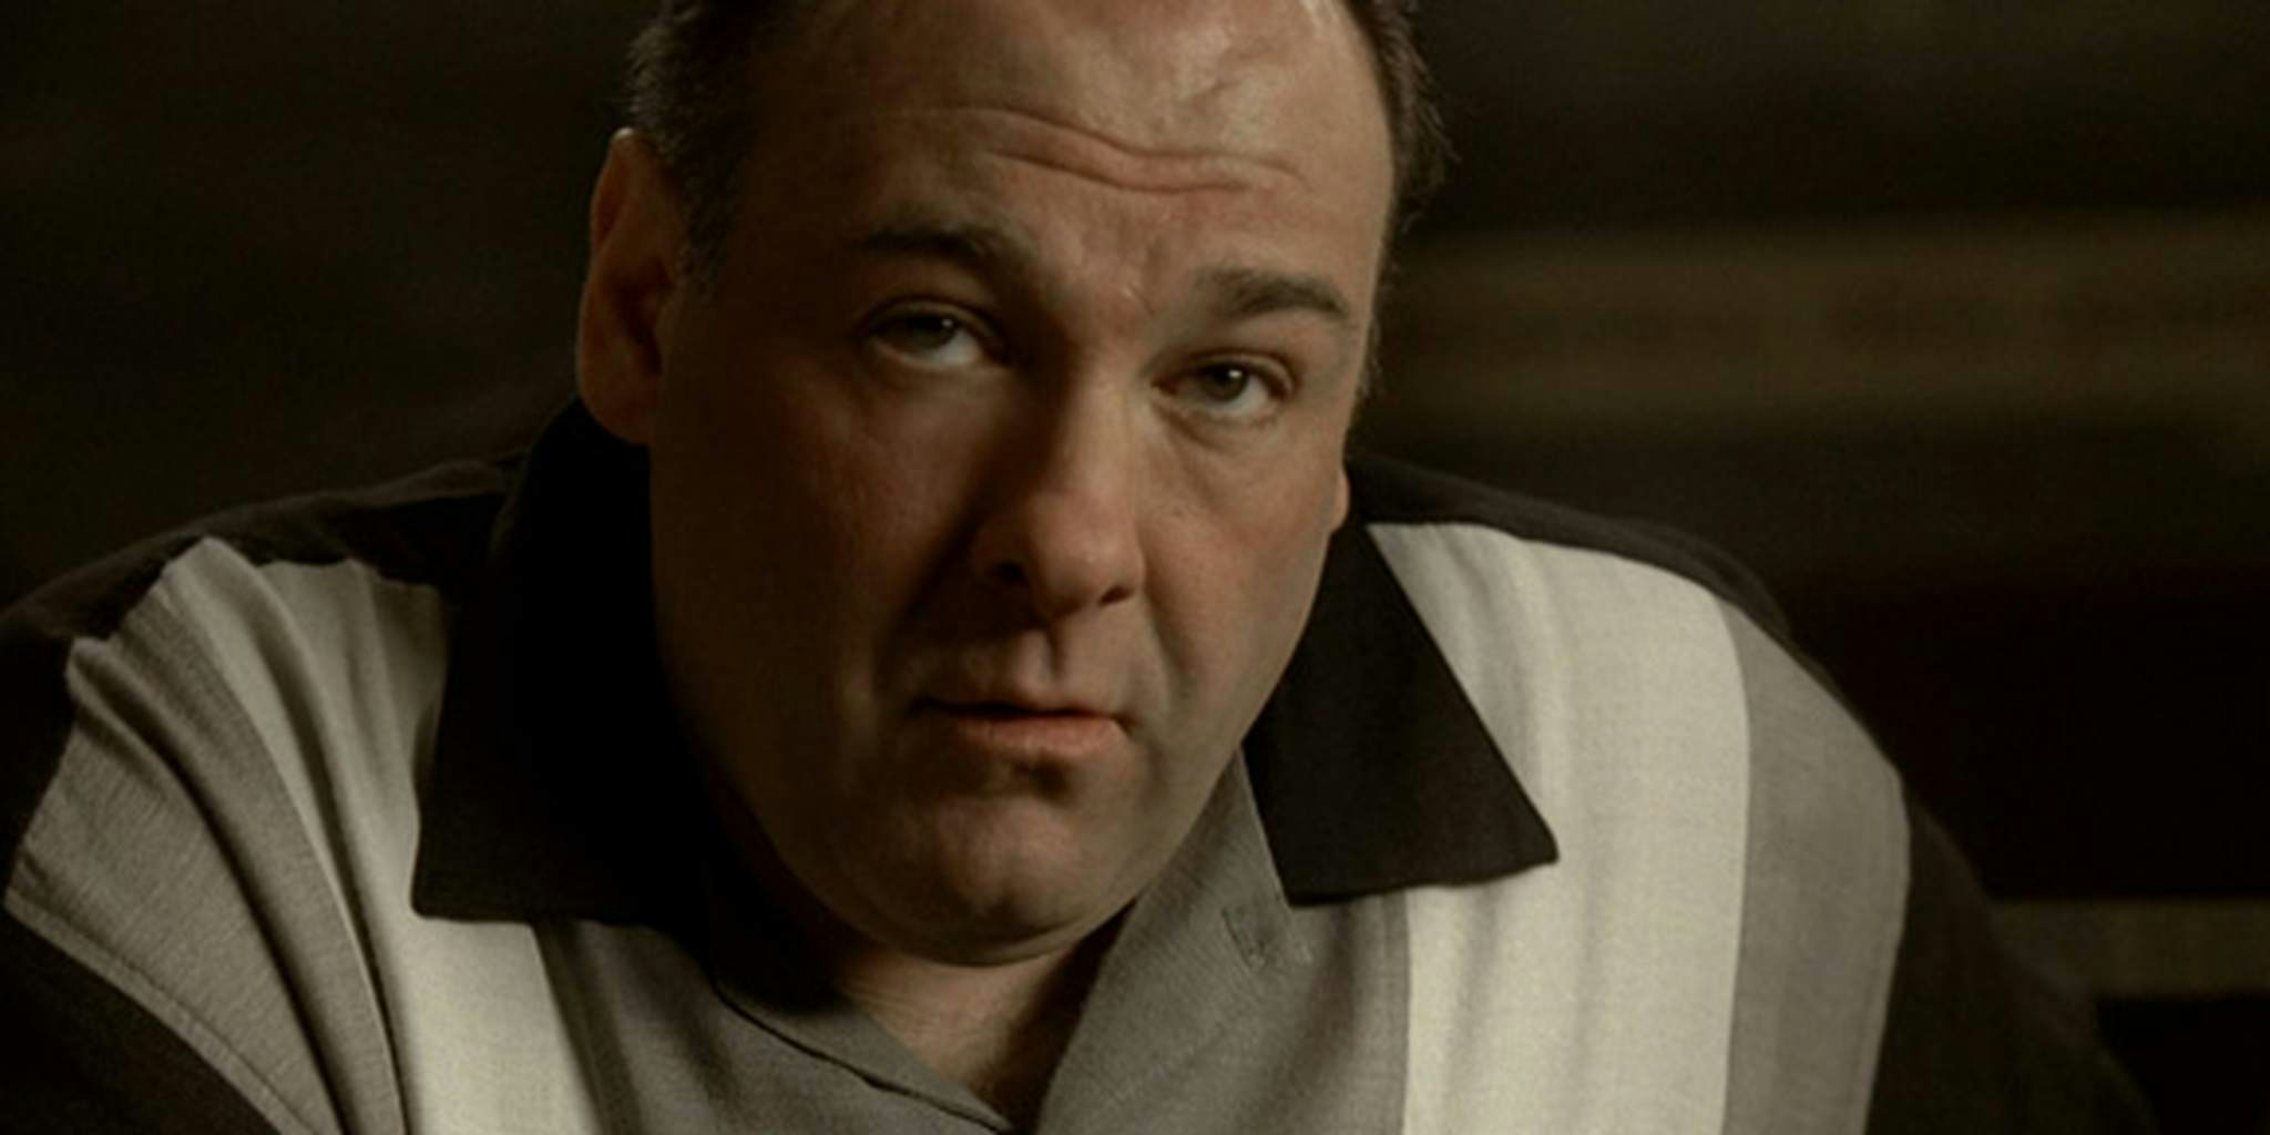 Actor James Gandolfini, TV's Tony Soprano, dies at 51 – The Denver Post